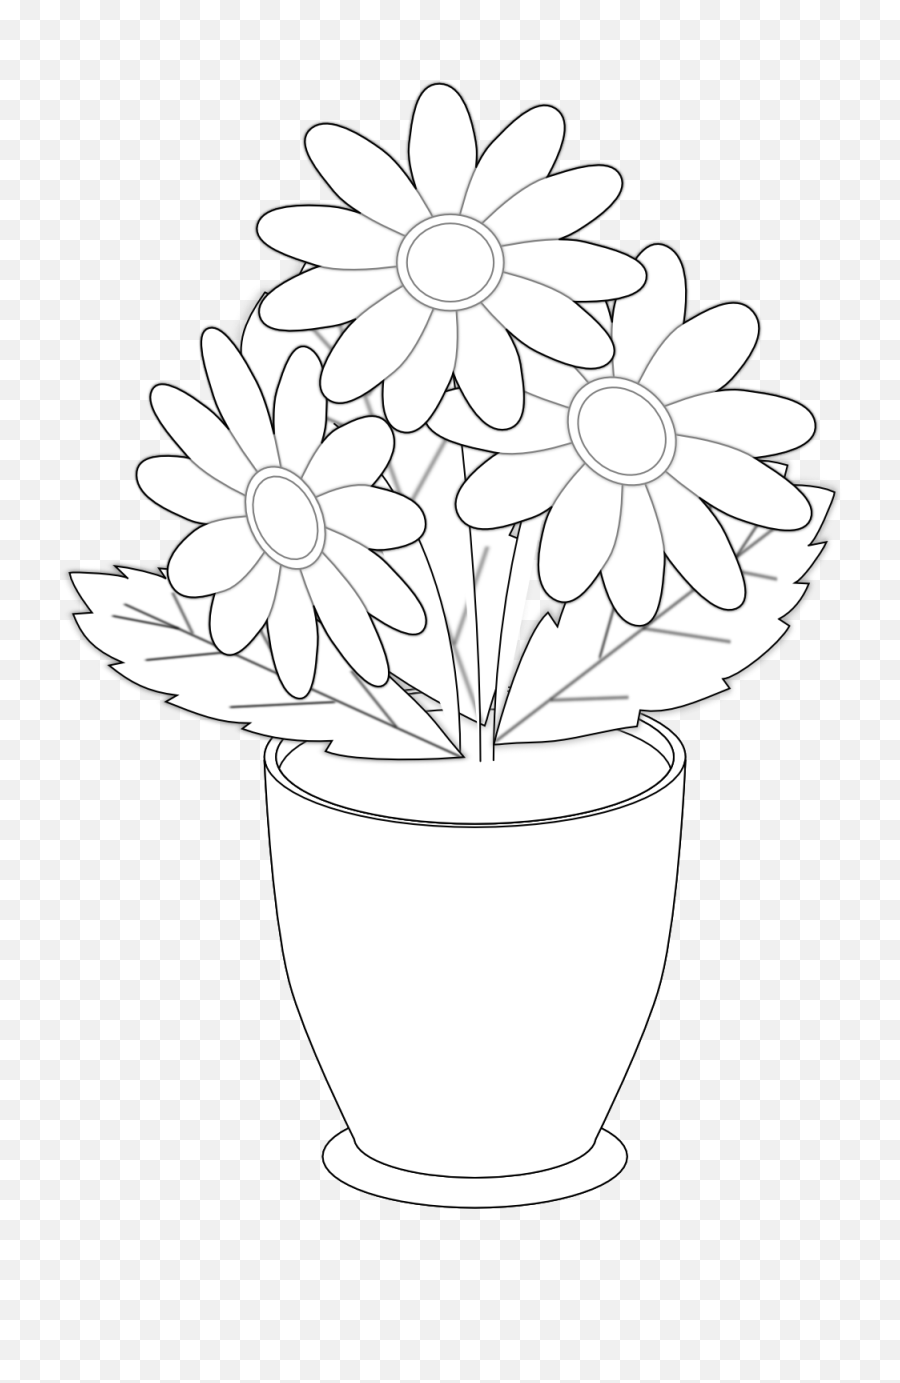 Vase Clipart Clip Art - Draw The Flower Vases Png Download Flowers Clip Art Black And White,Vase Png